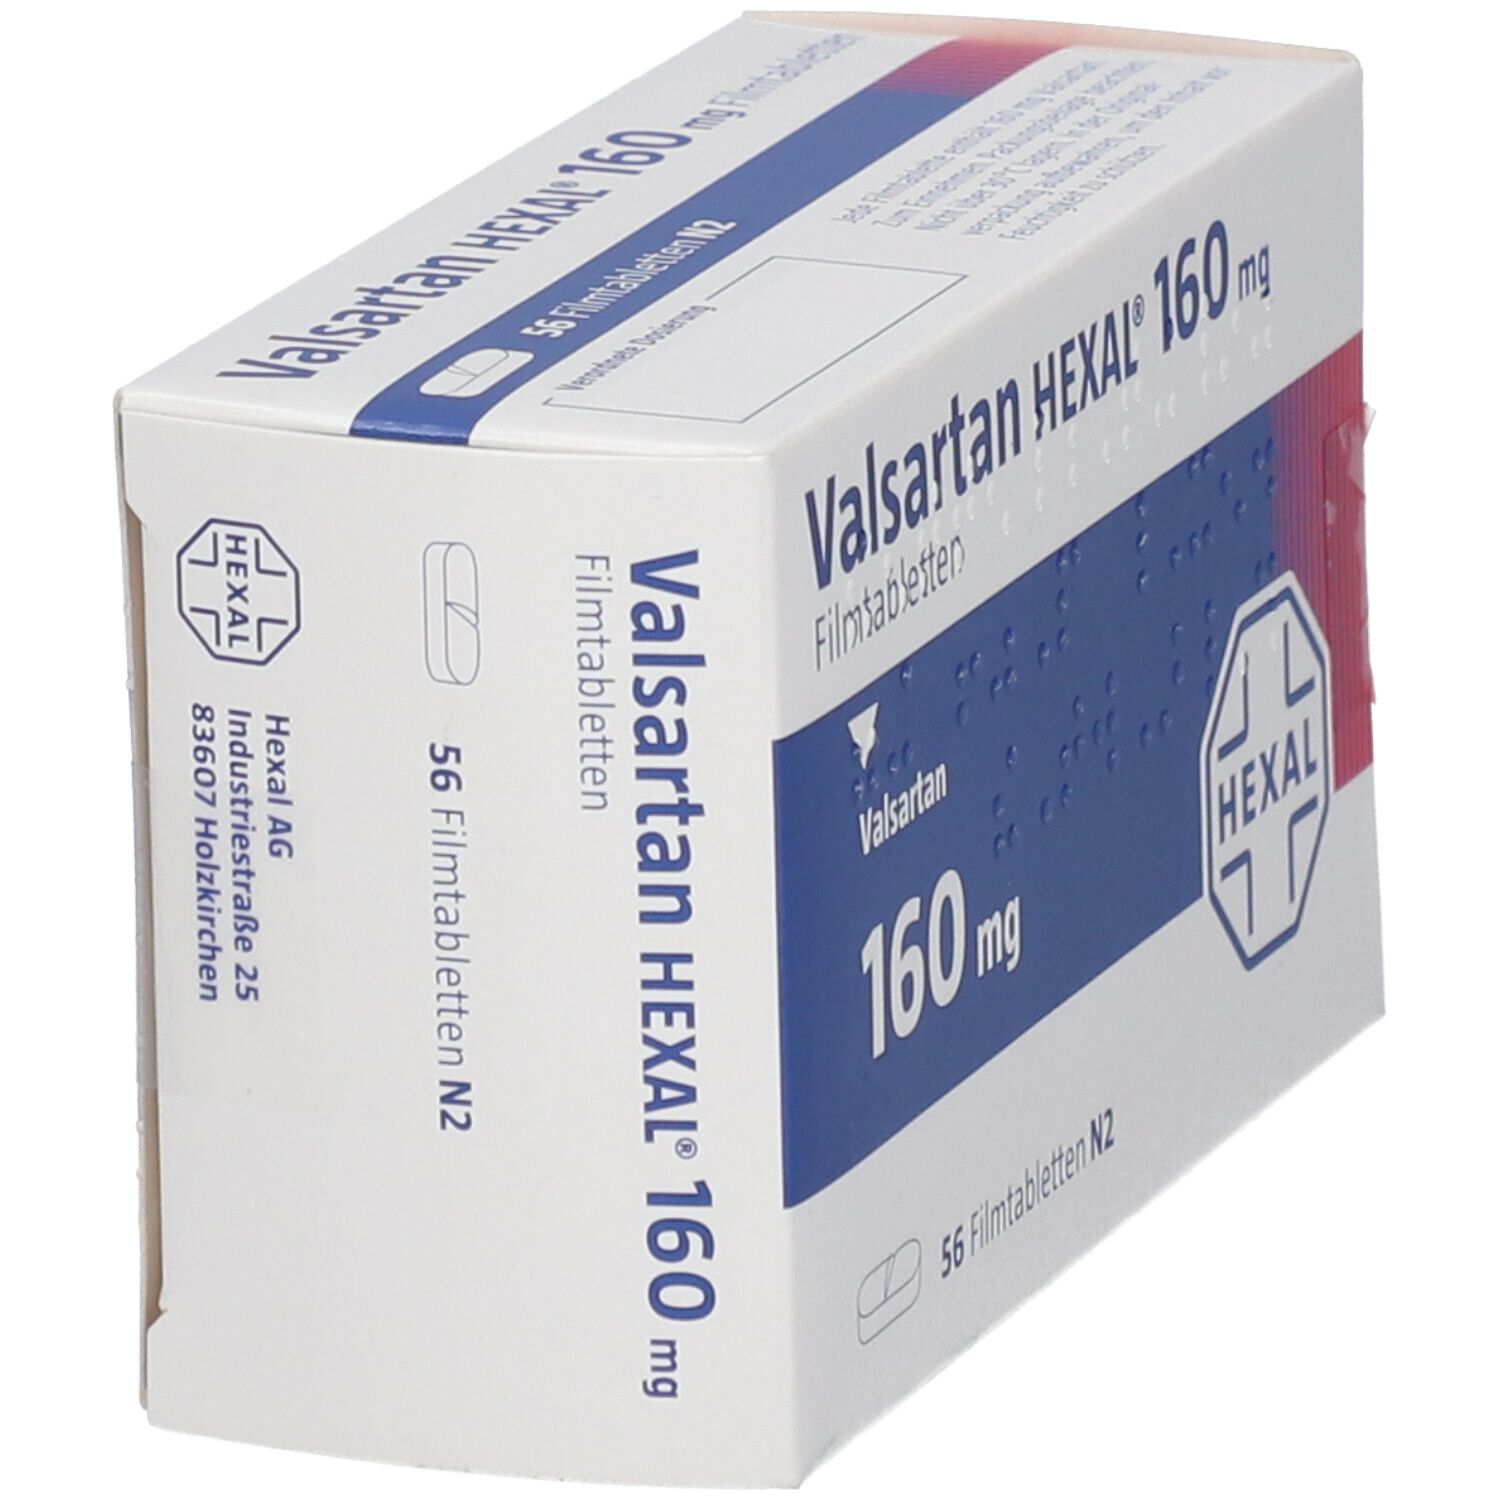 Valsartan HEXAL® 160 mg